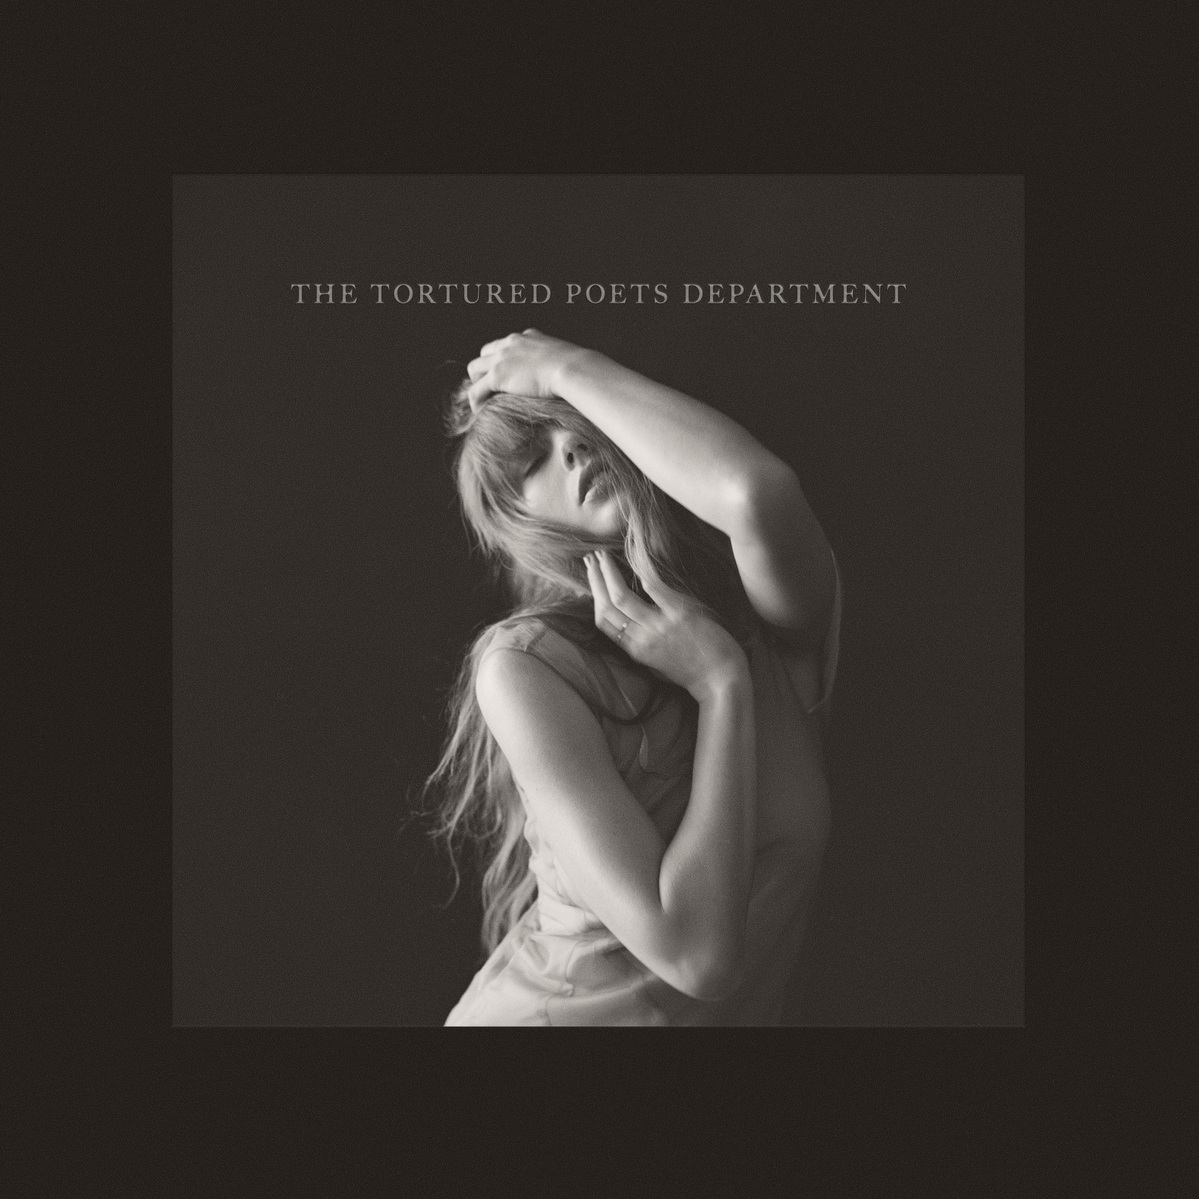 Album cover for Taylor Swifts most recent album, Tortured Poets Department Record label Republic Records, Photographer Beth Garrabrant